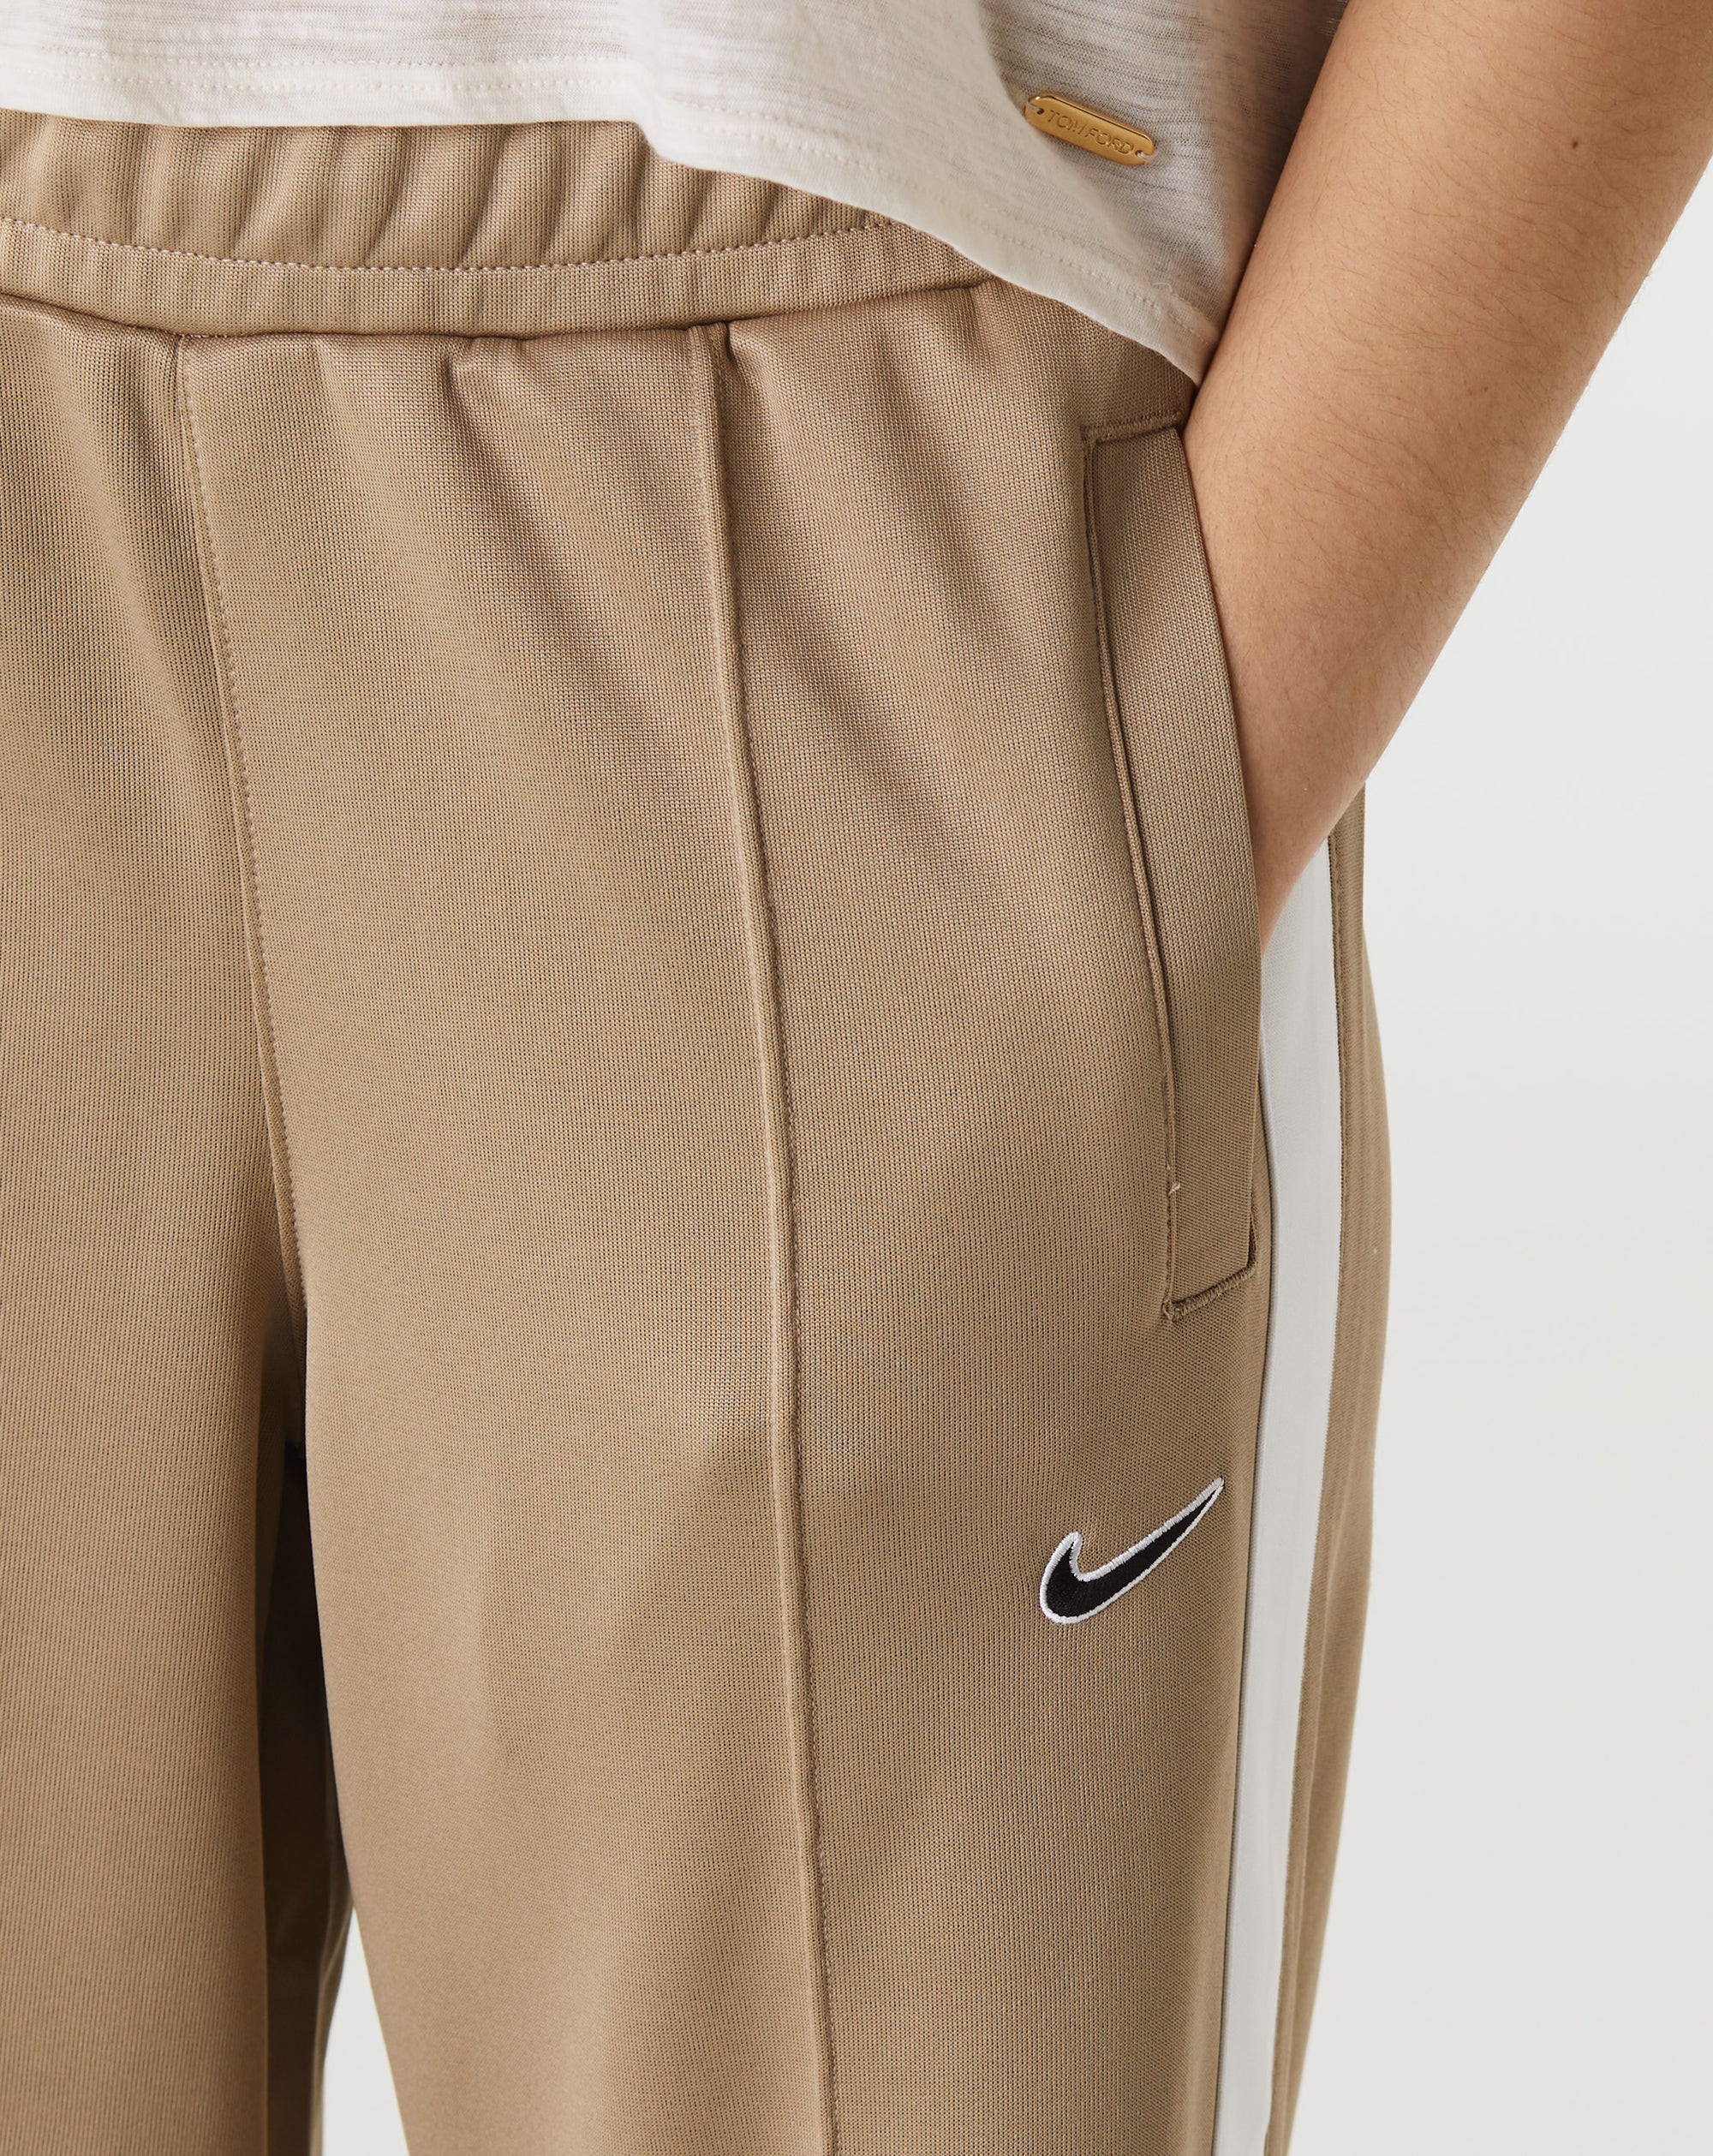 Nike Women's Pants - Rule of Next Apparel